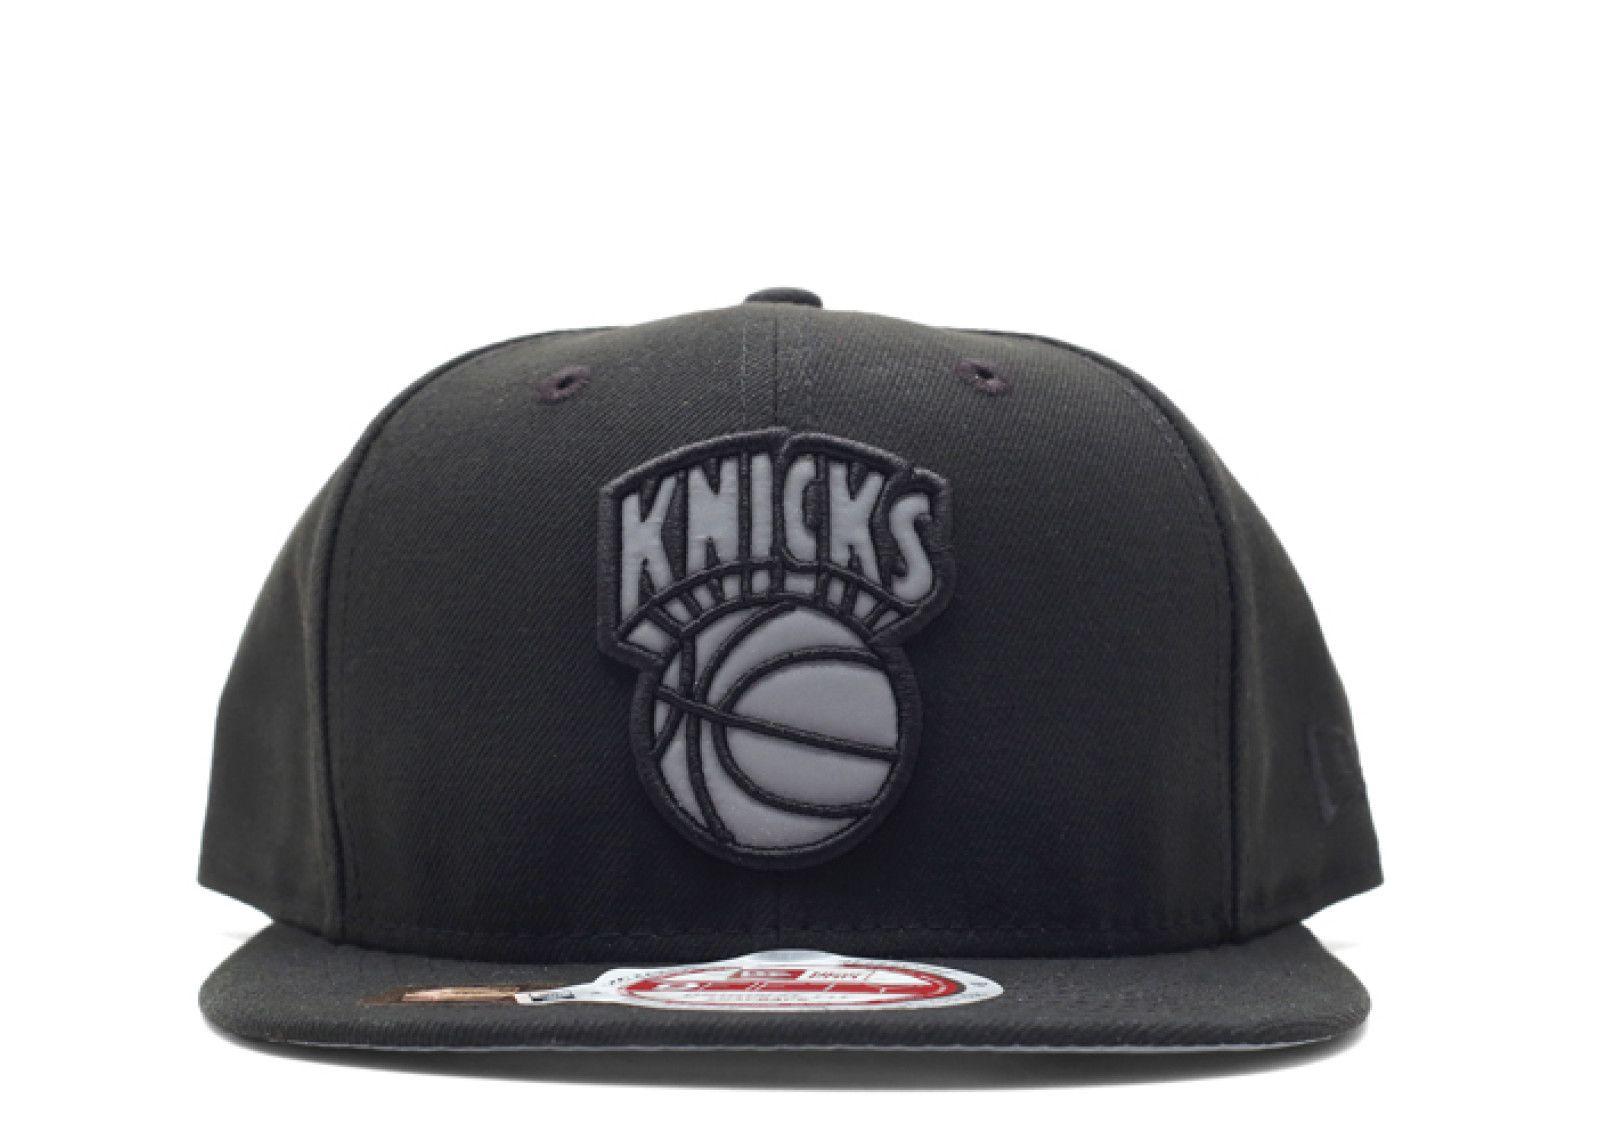 New 3M Logo - New York Knicks Snap-back 